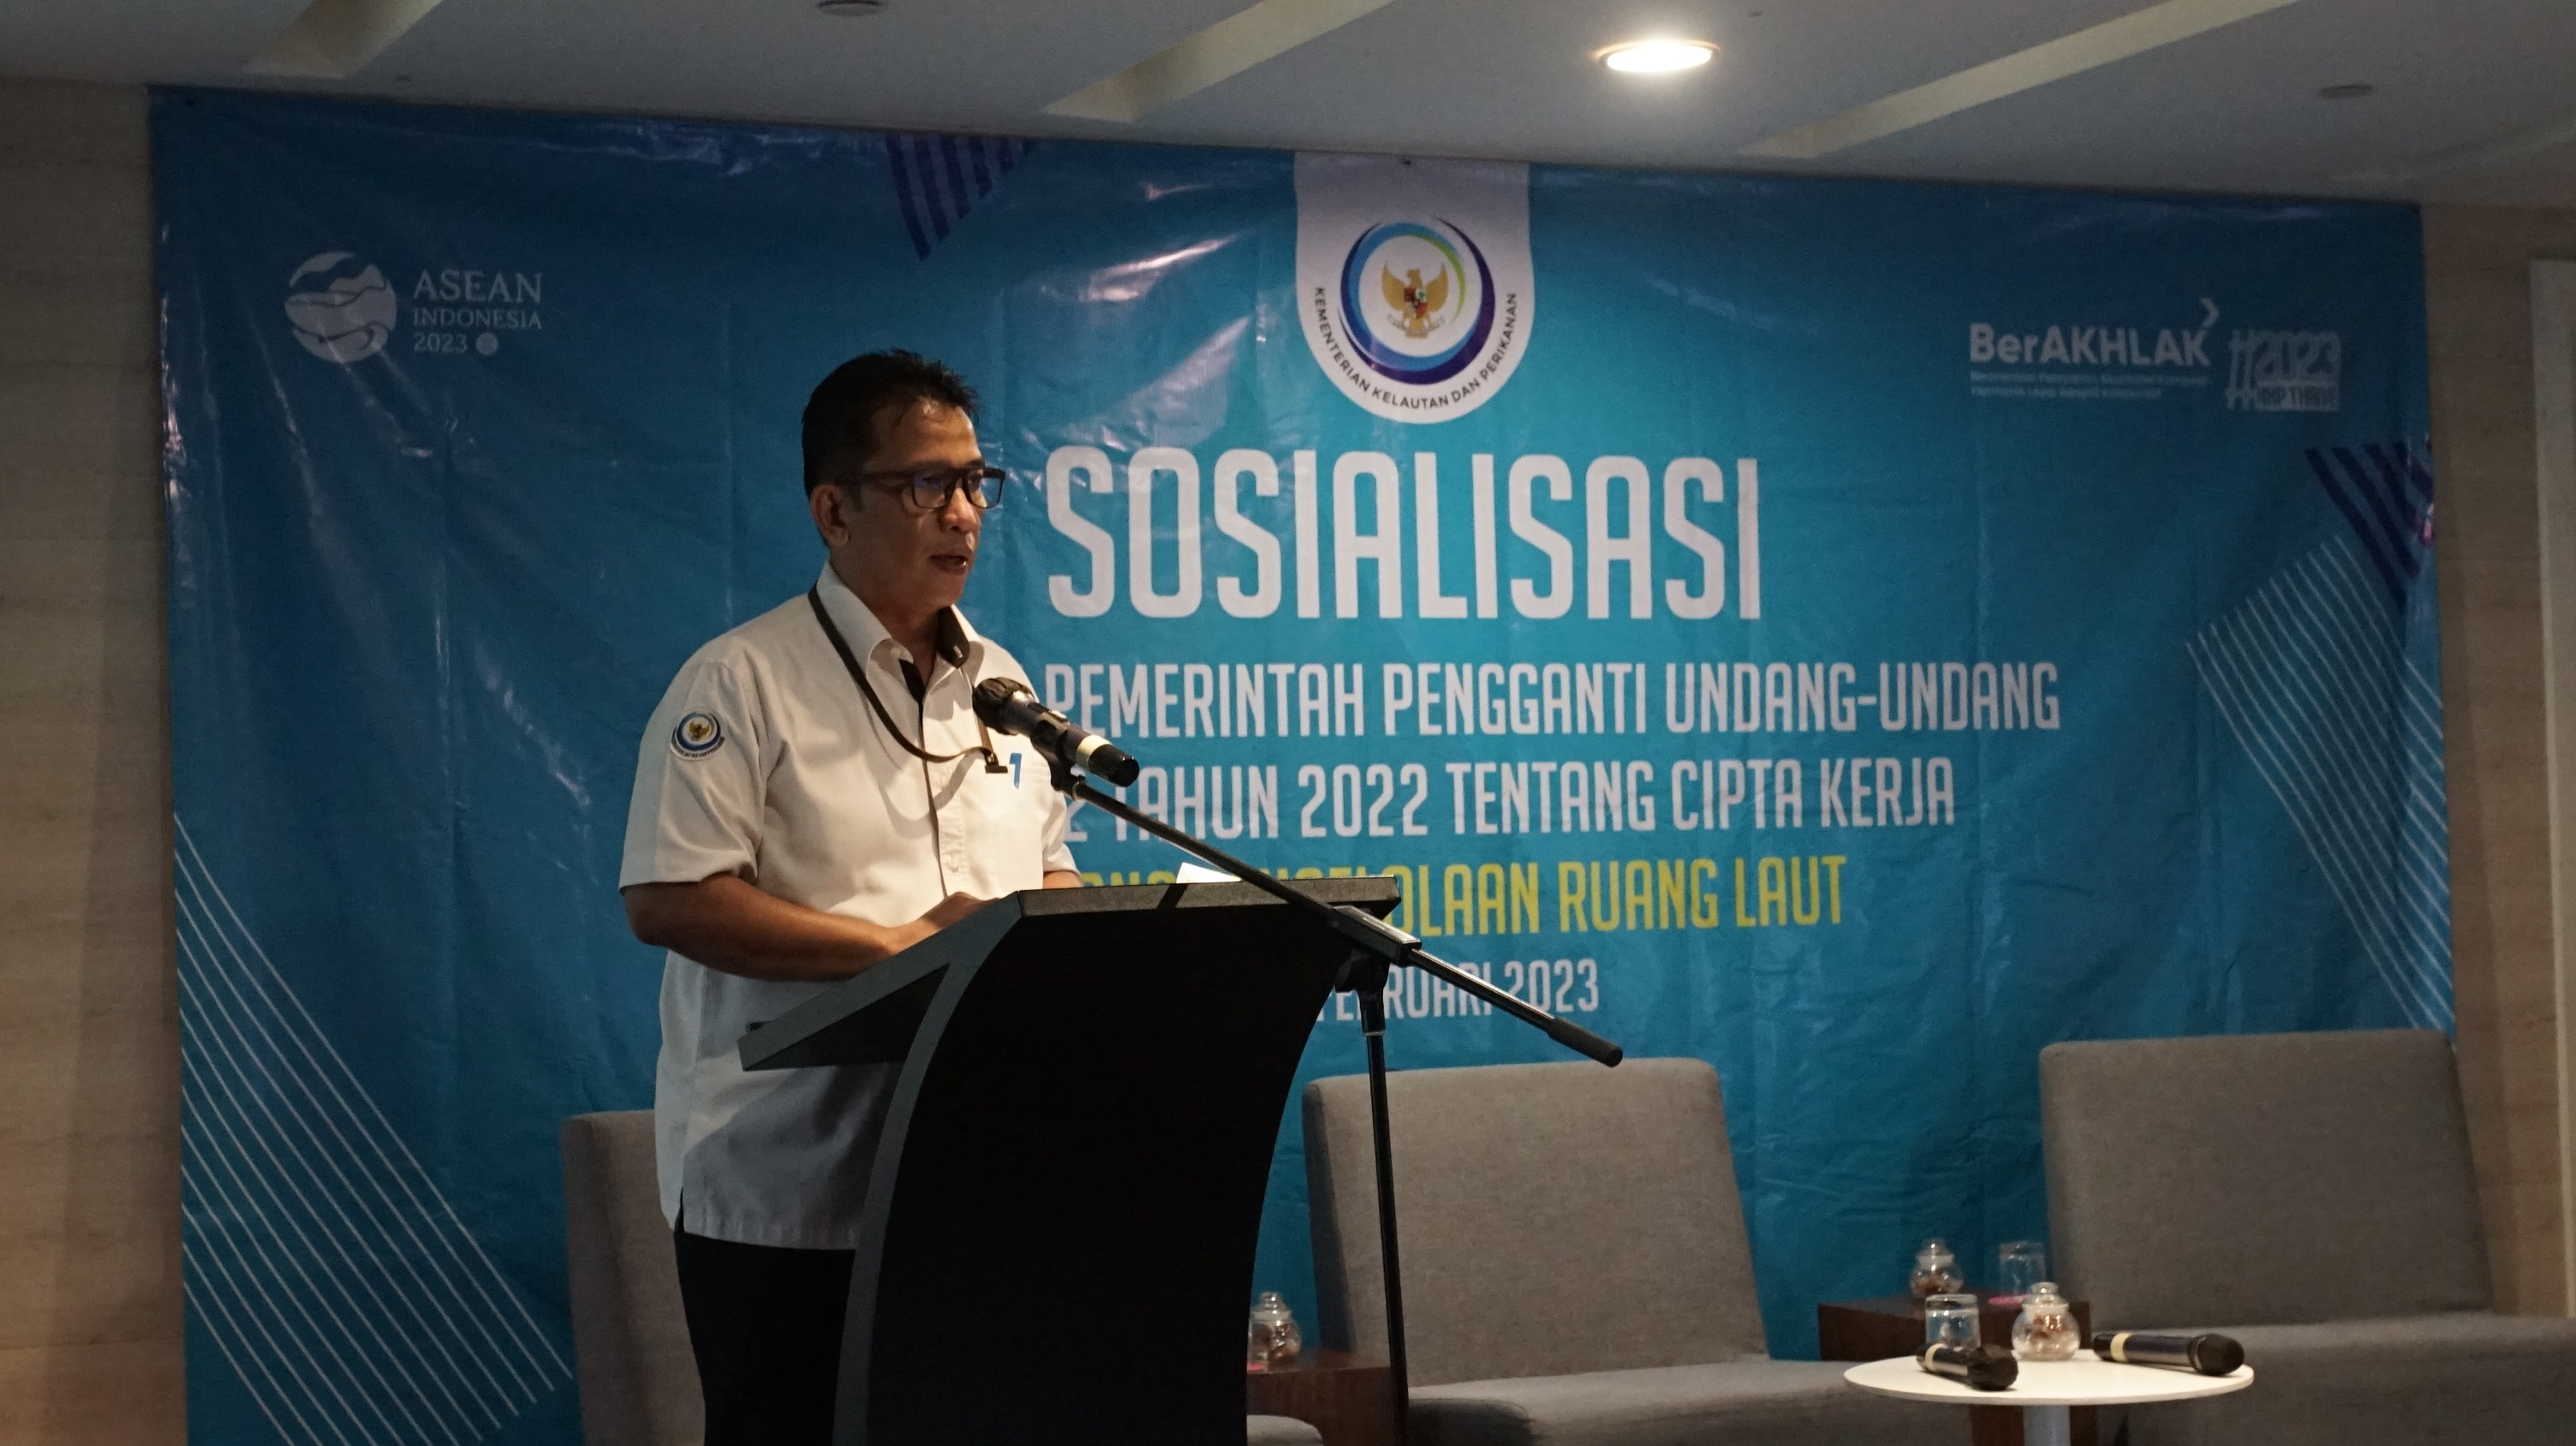 Sosialisasi Peraturan Pemerintah Pengganti Undang-Undang Nomor 2 tahun 2022 tentang Cipta Kerja Bidang Pengelolaan Ruang Laut, Jakarta (13/2).